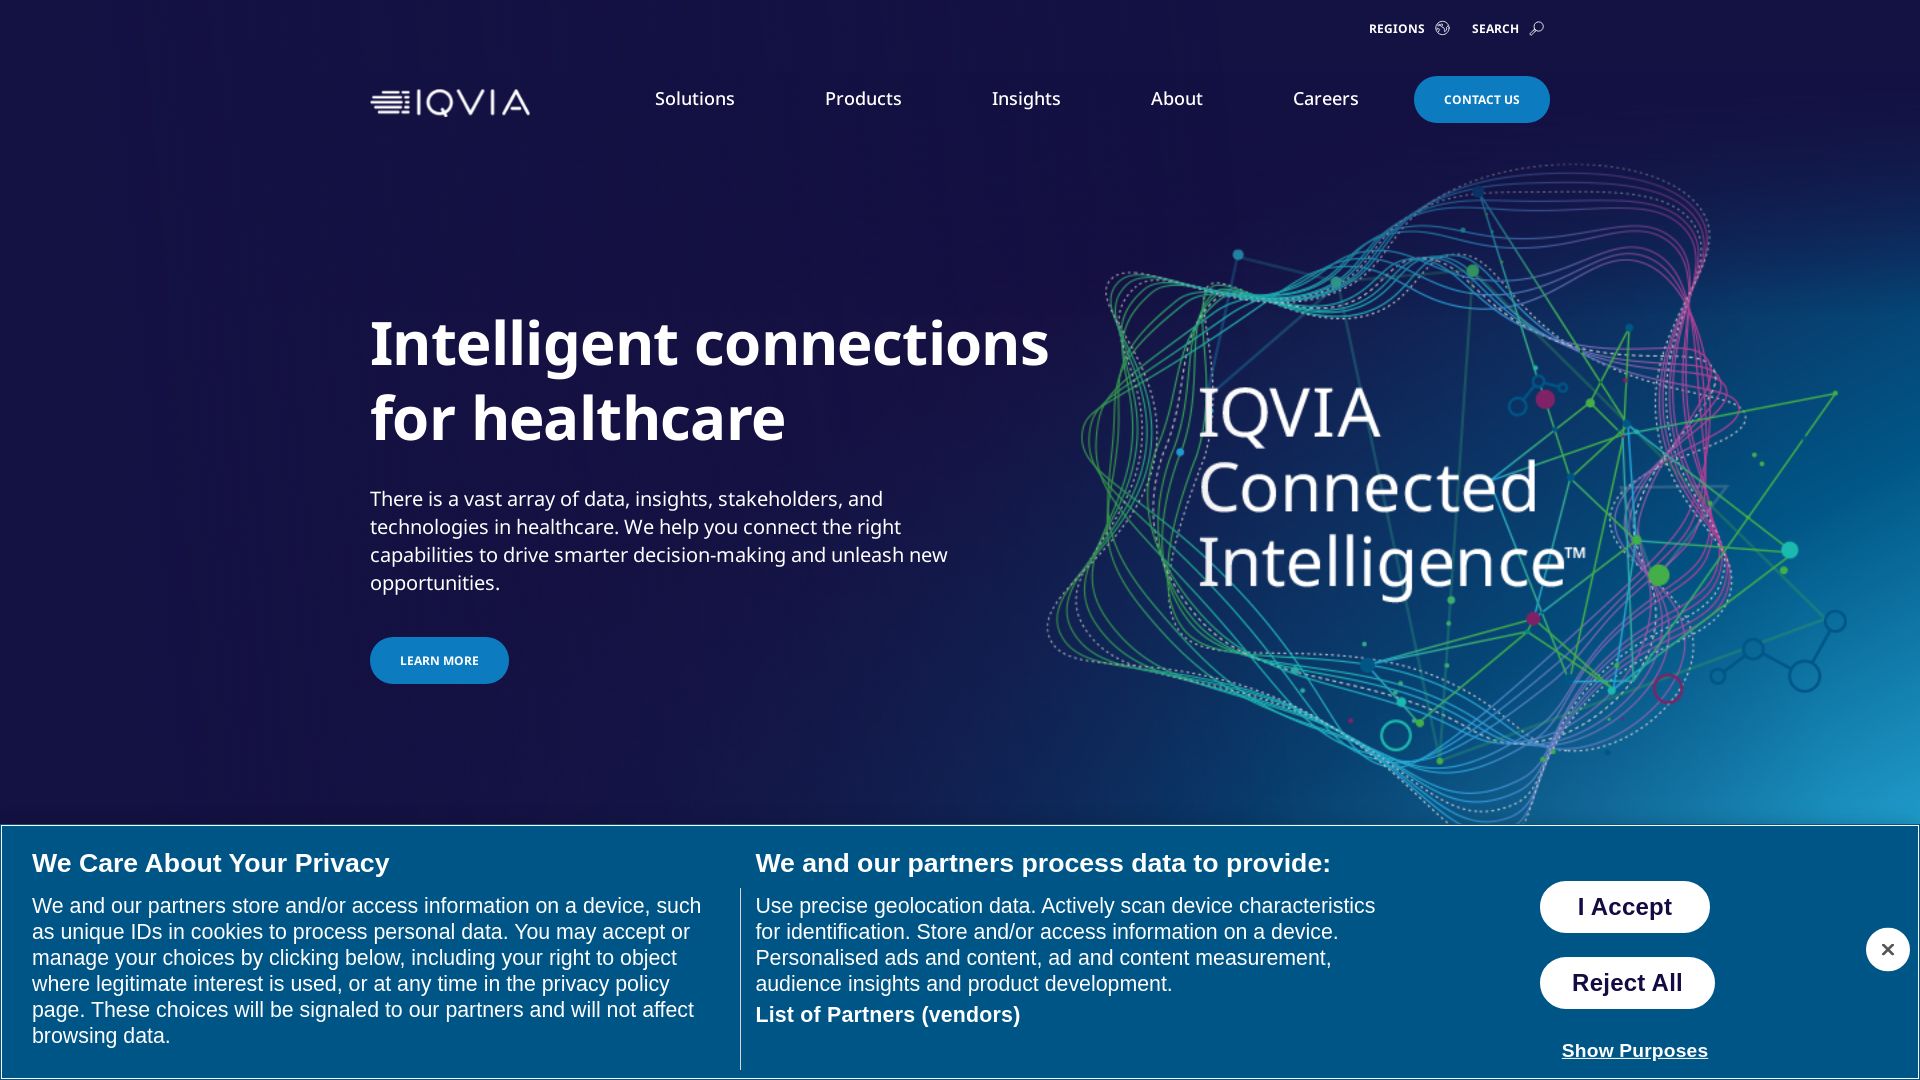 Website status iqvia.com is   ONLINE